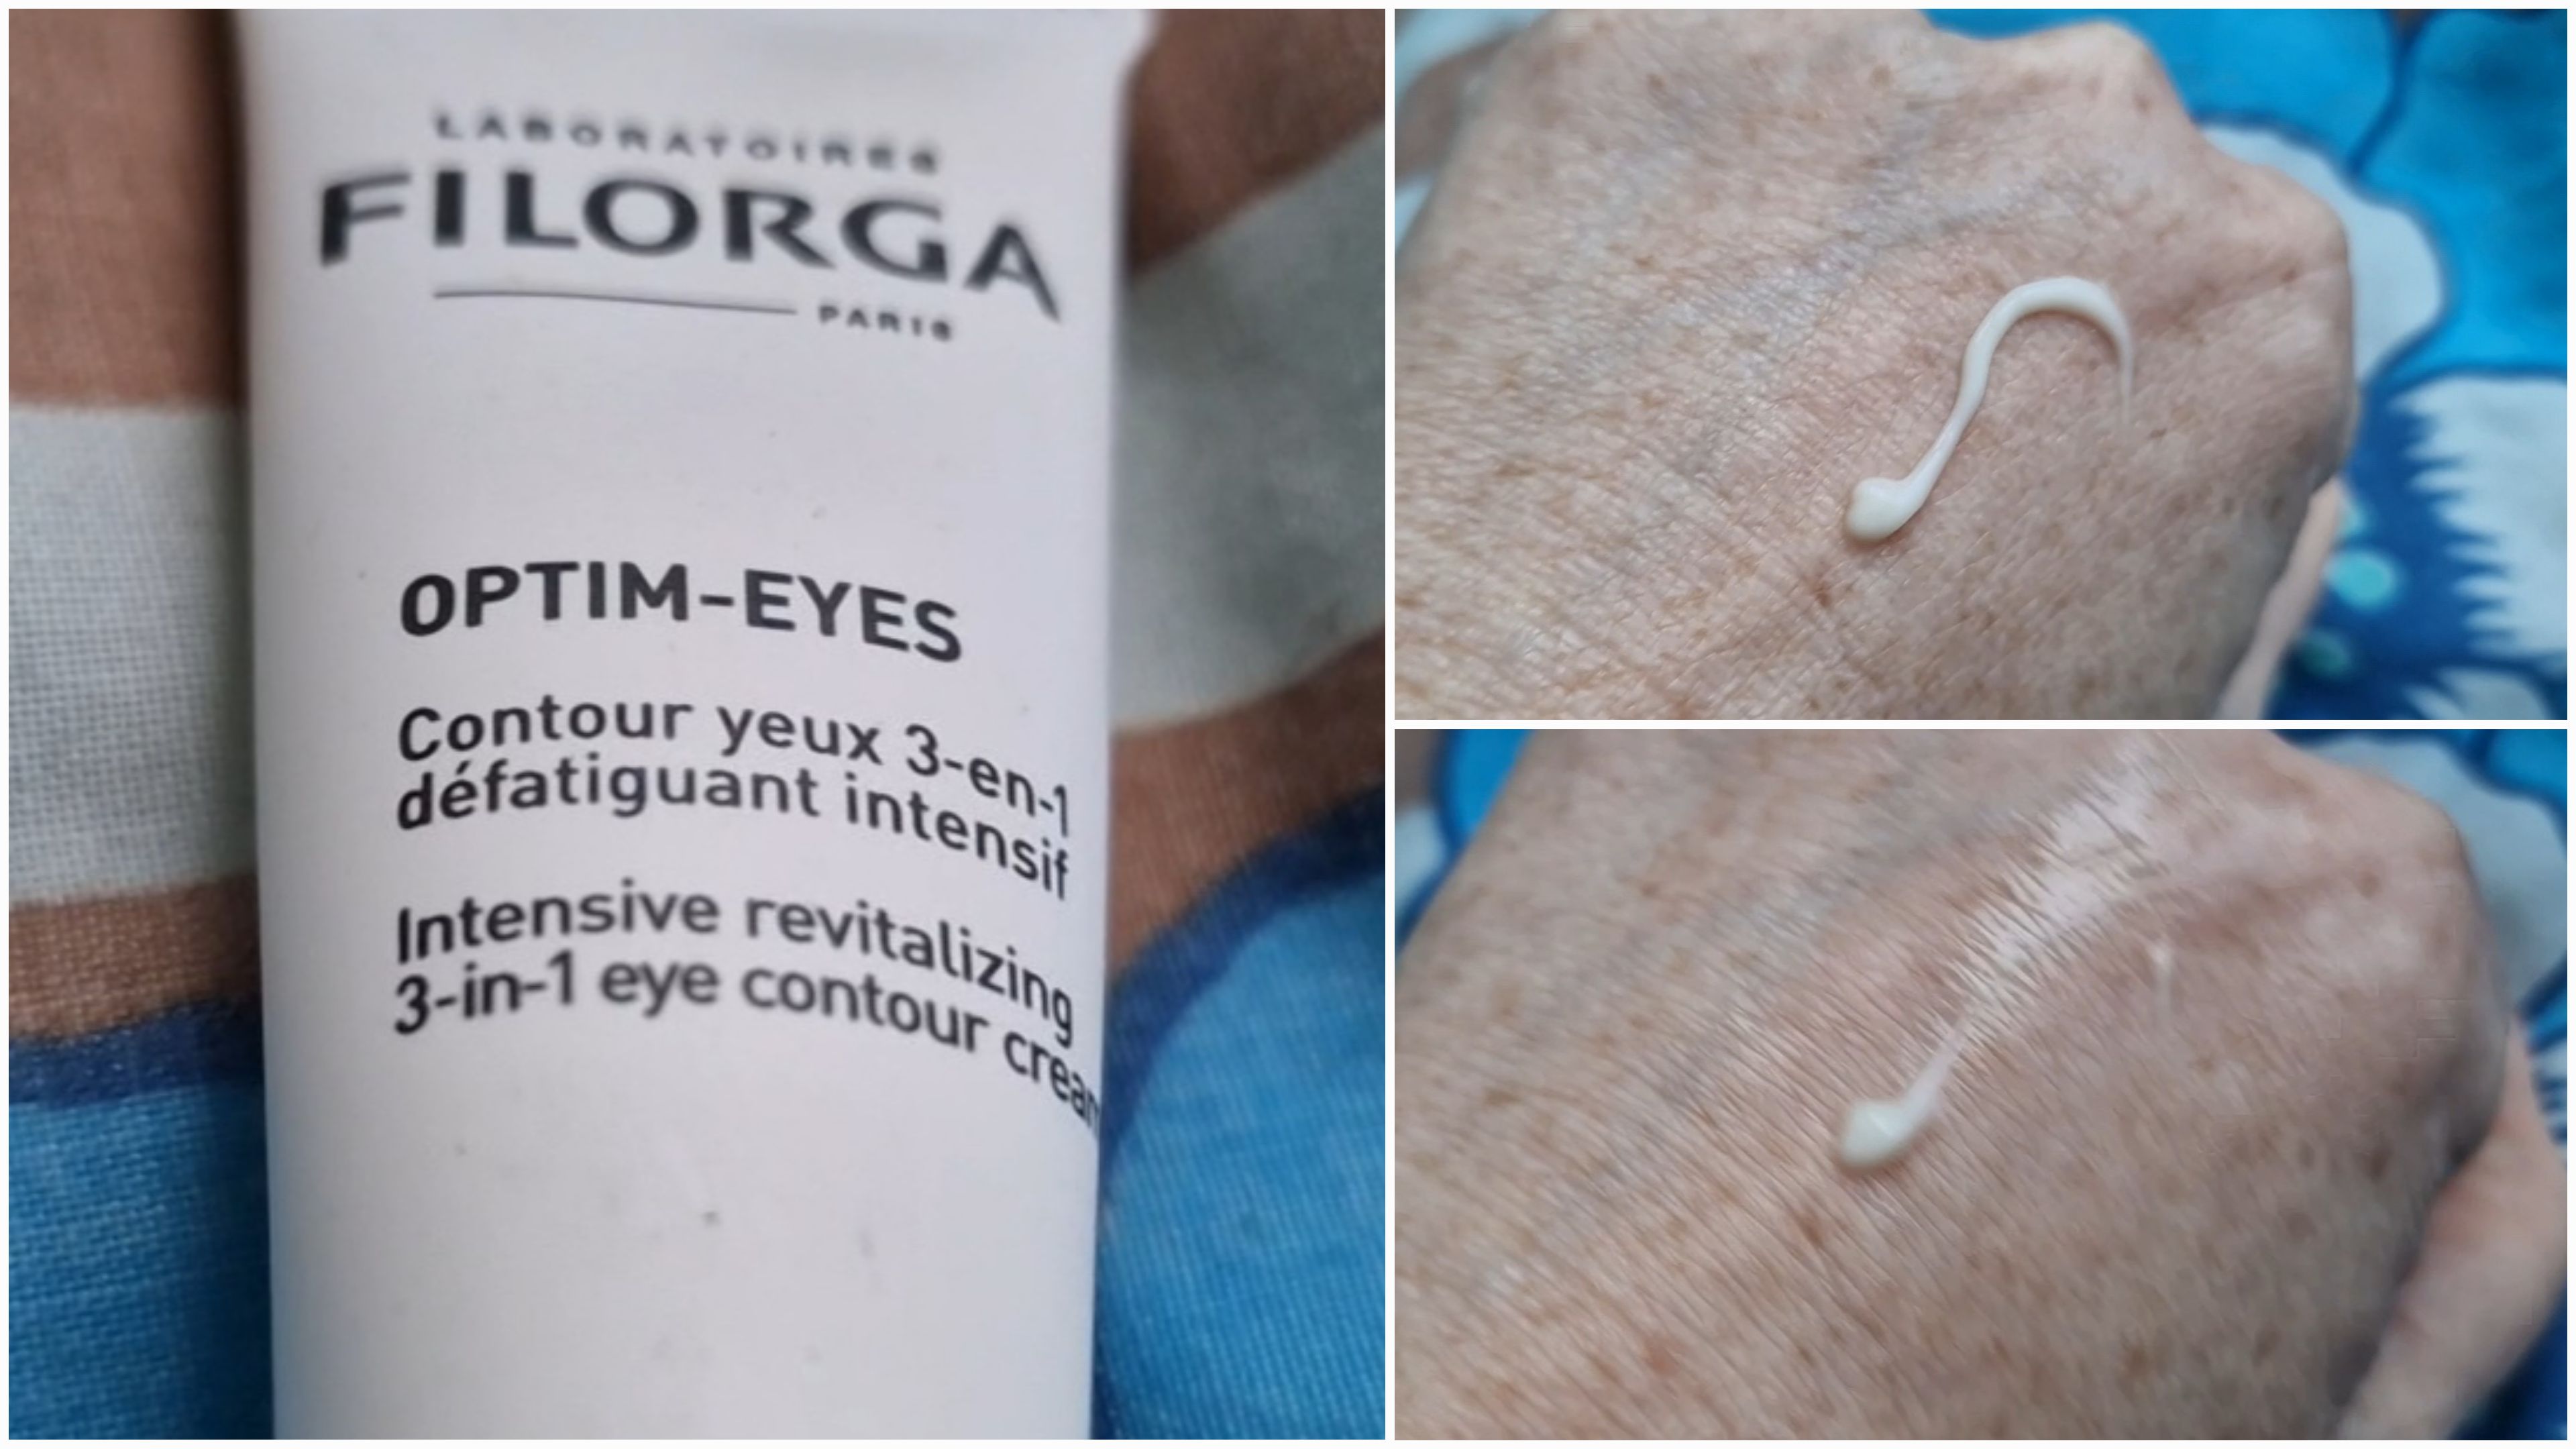 Filorga Optim-Eye Intensive revitalizing 3-in-1 eye contour cream